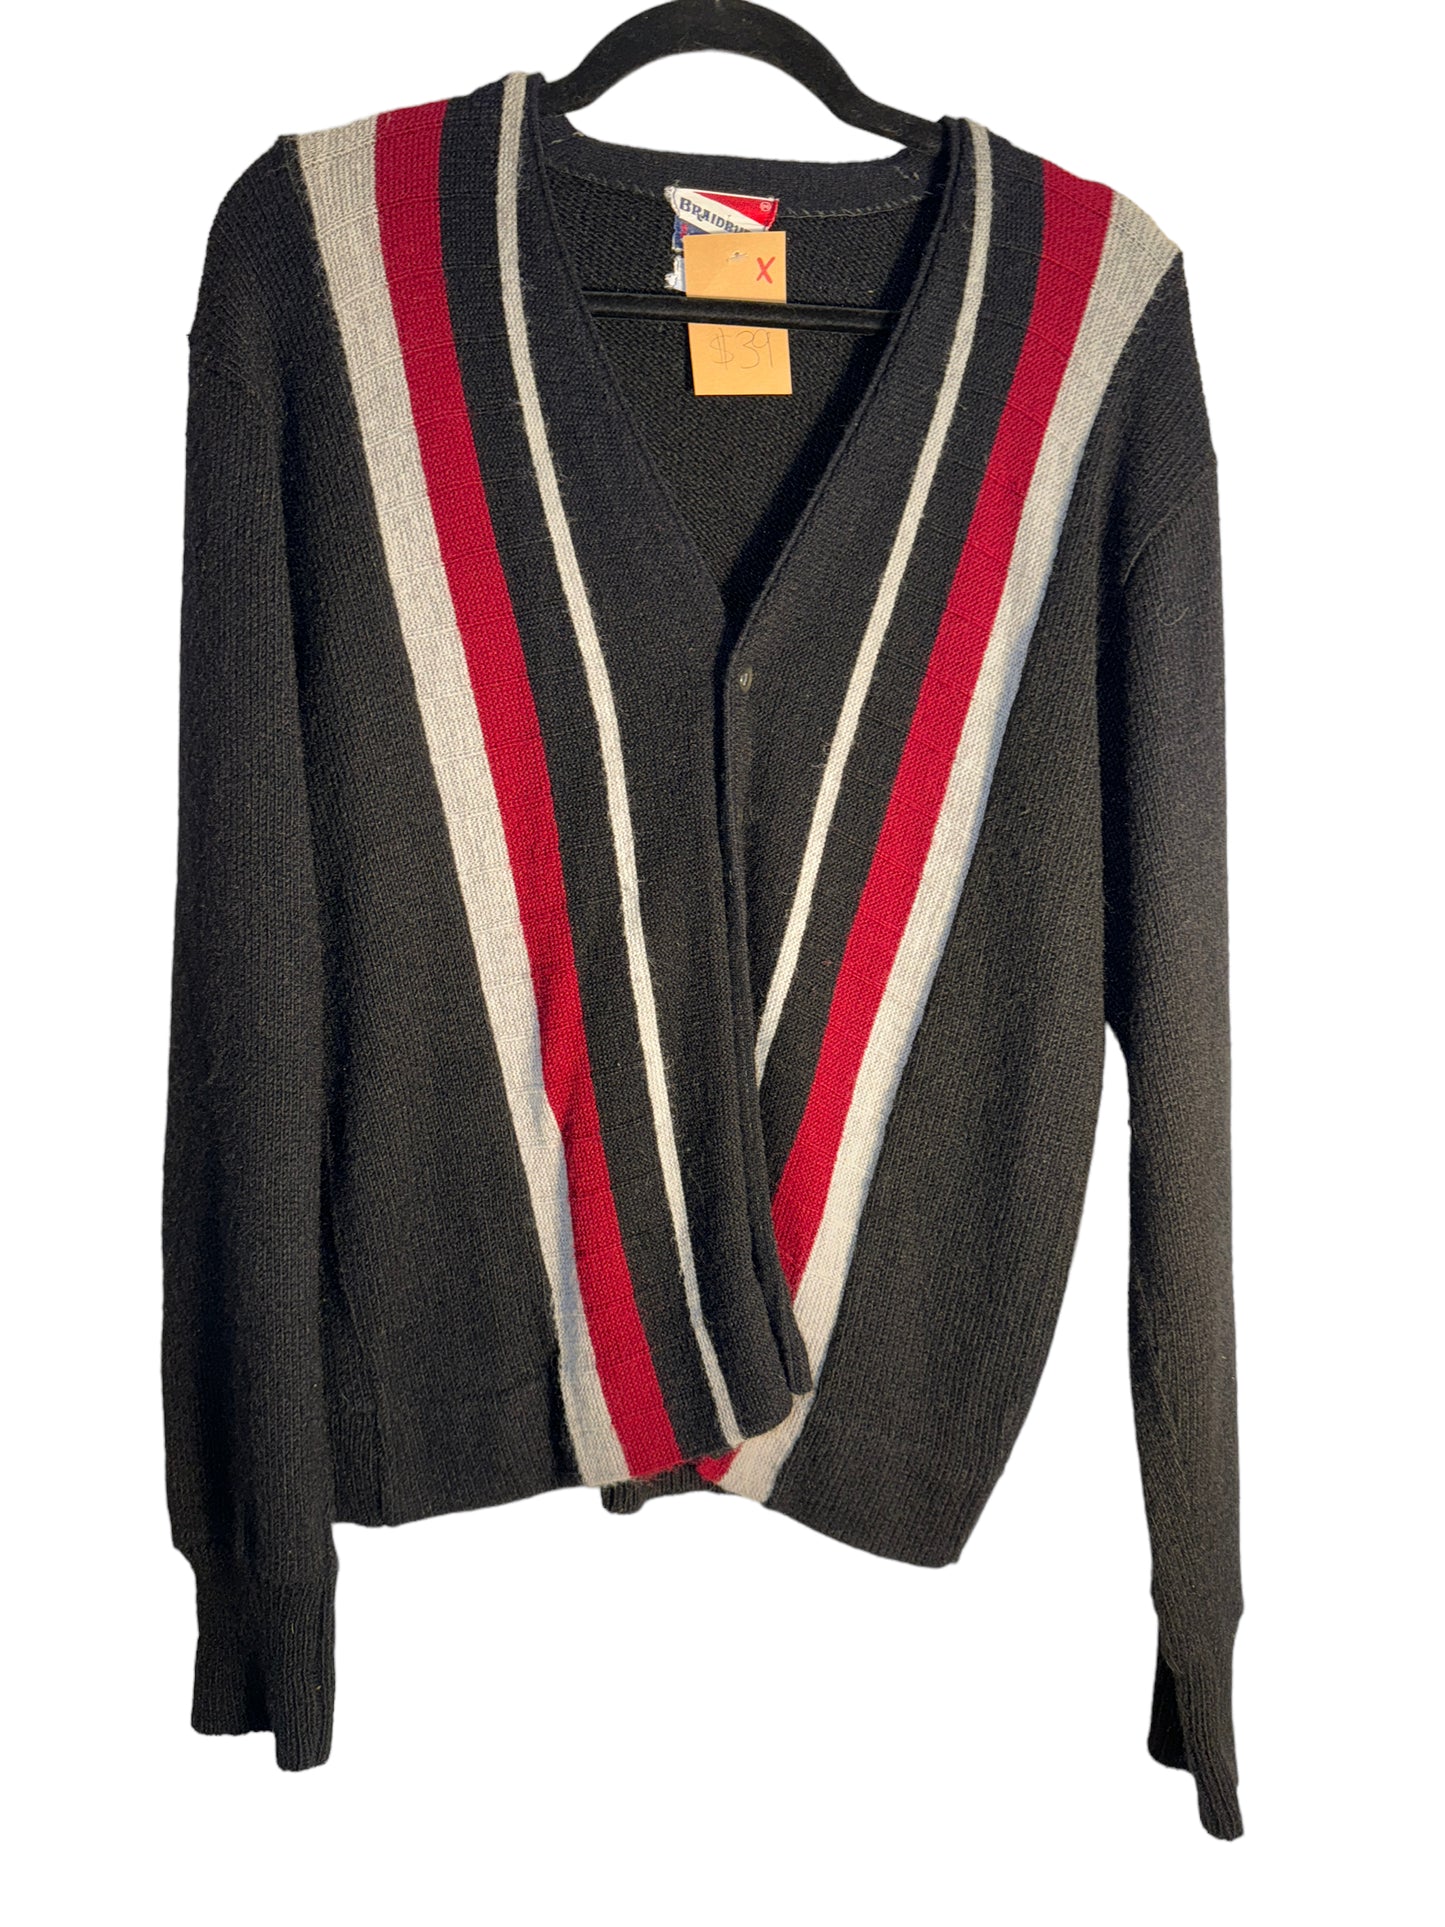 Vintage Striped Cardigan by Braidburn